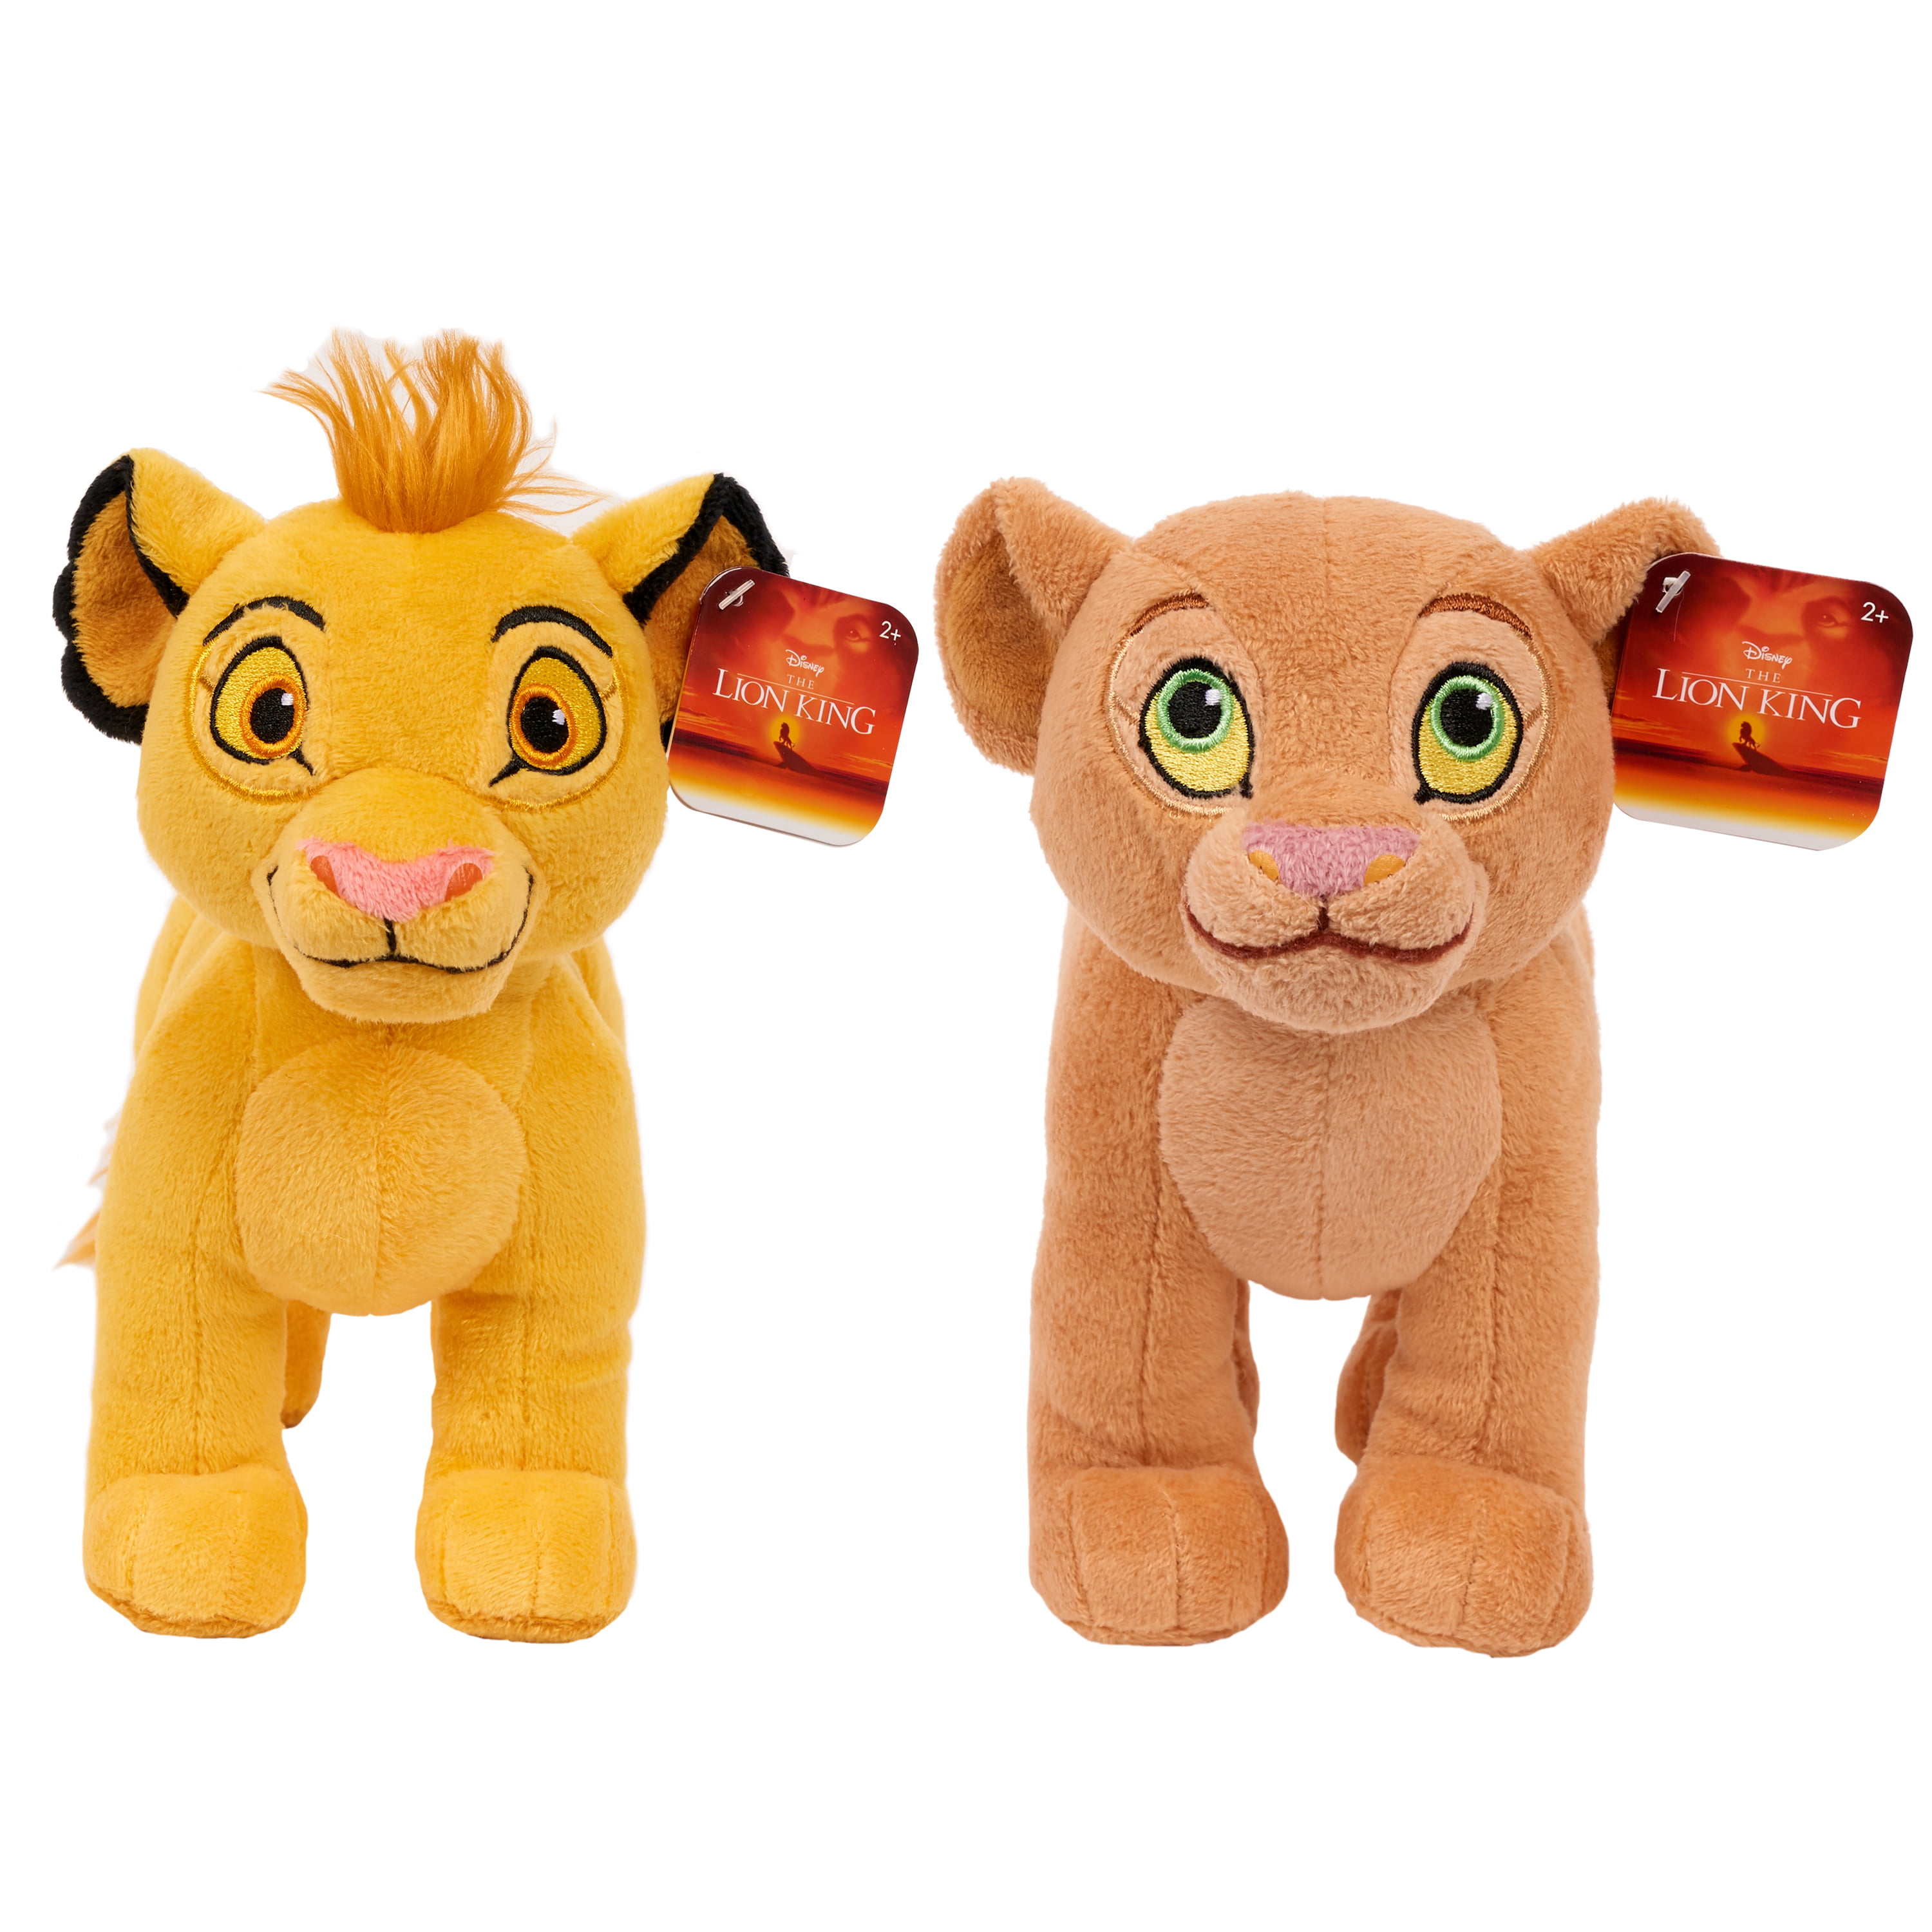 lion king plush toys walmart